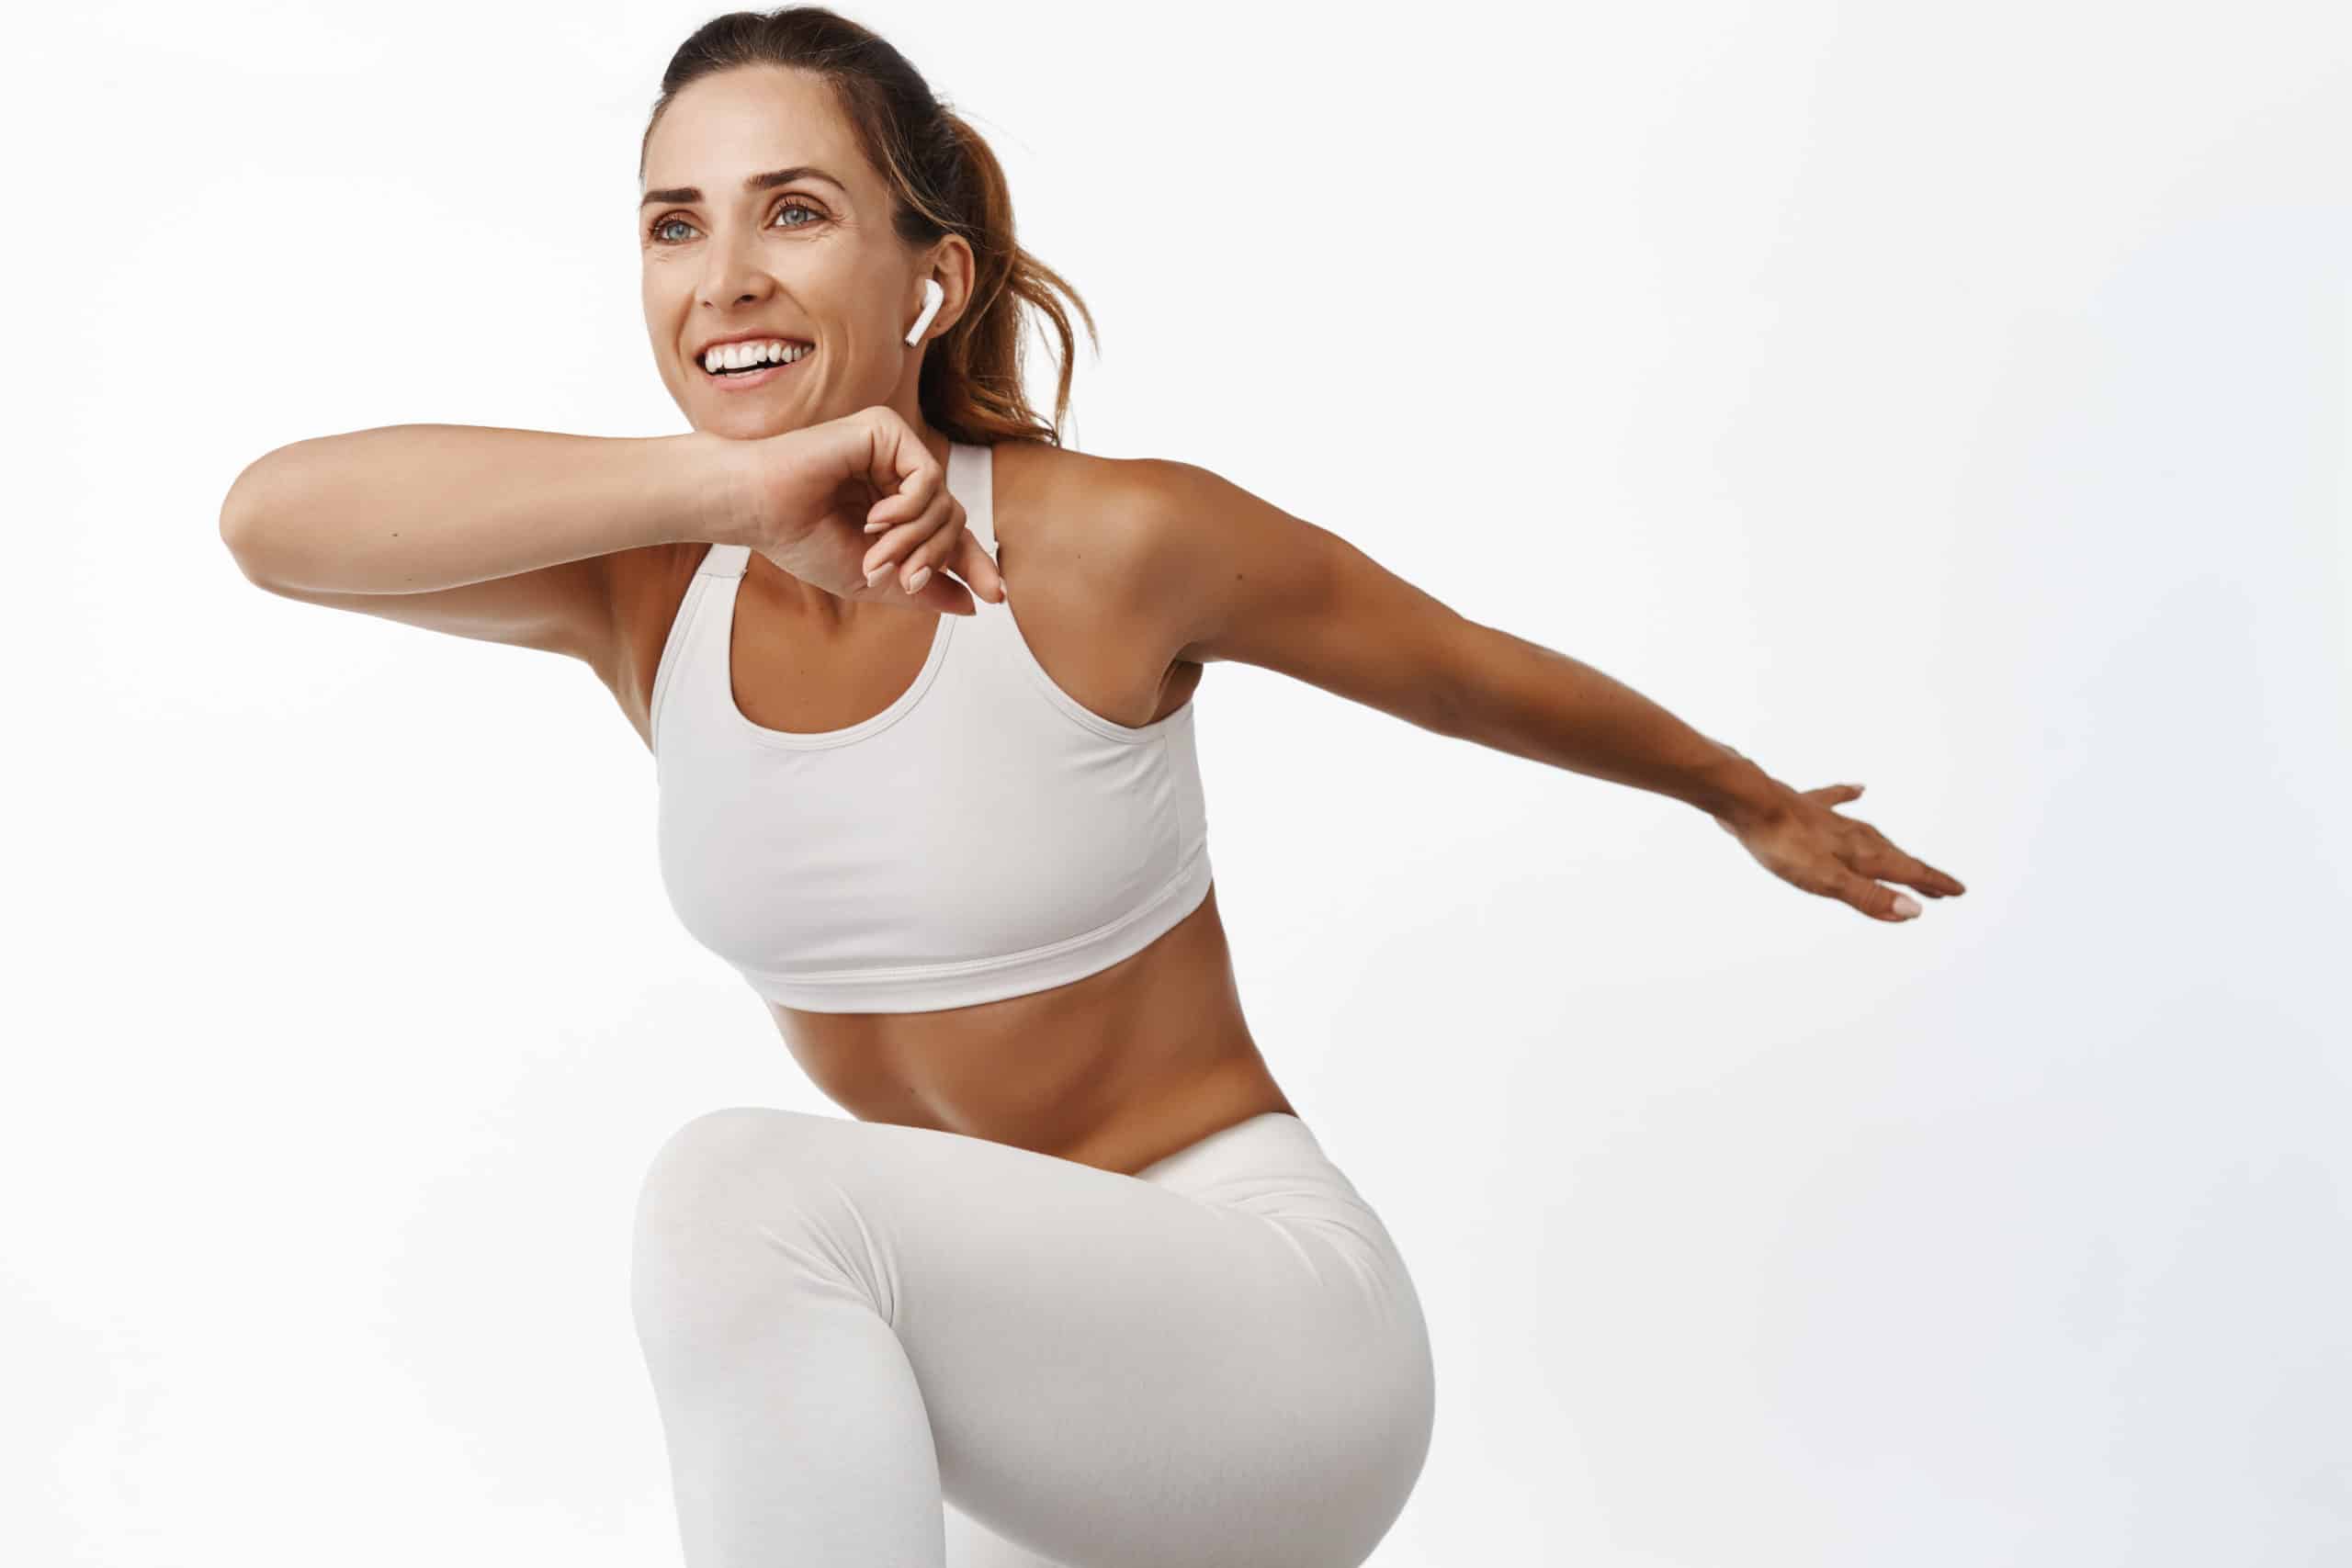 portrait-sportswoman-stretching-body-exercising-doing-fitness-leg-raise-smiling-running-standing-white-background-scaled